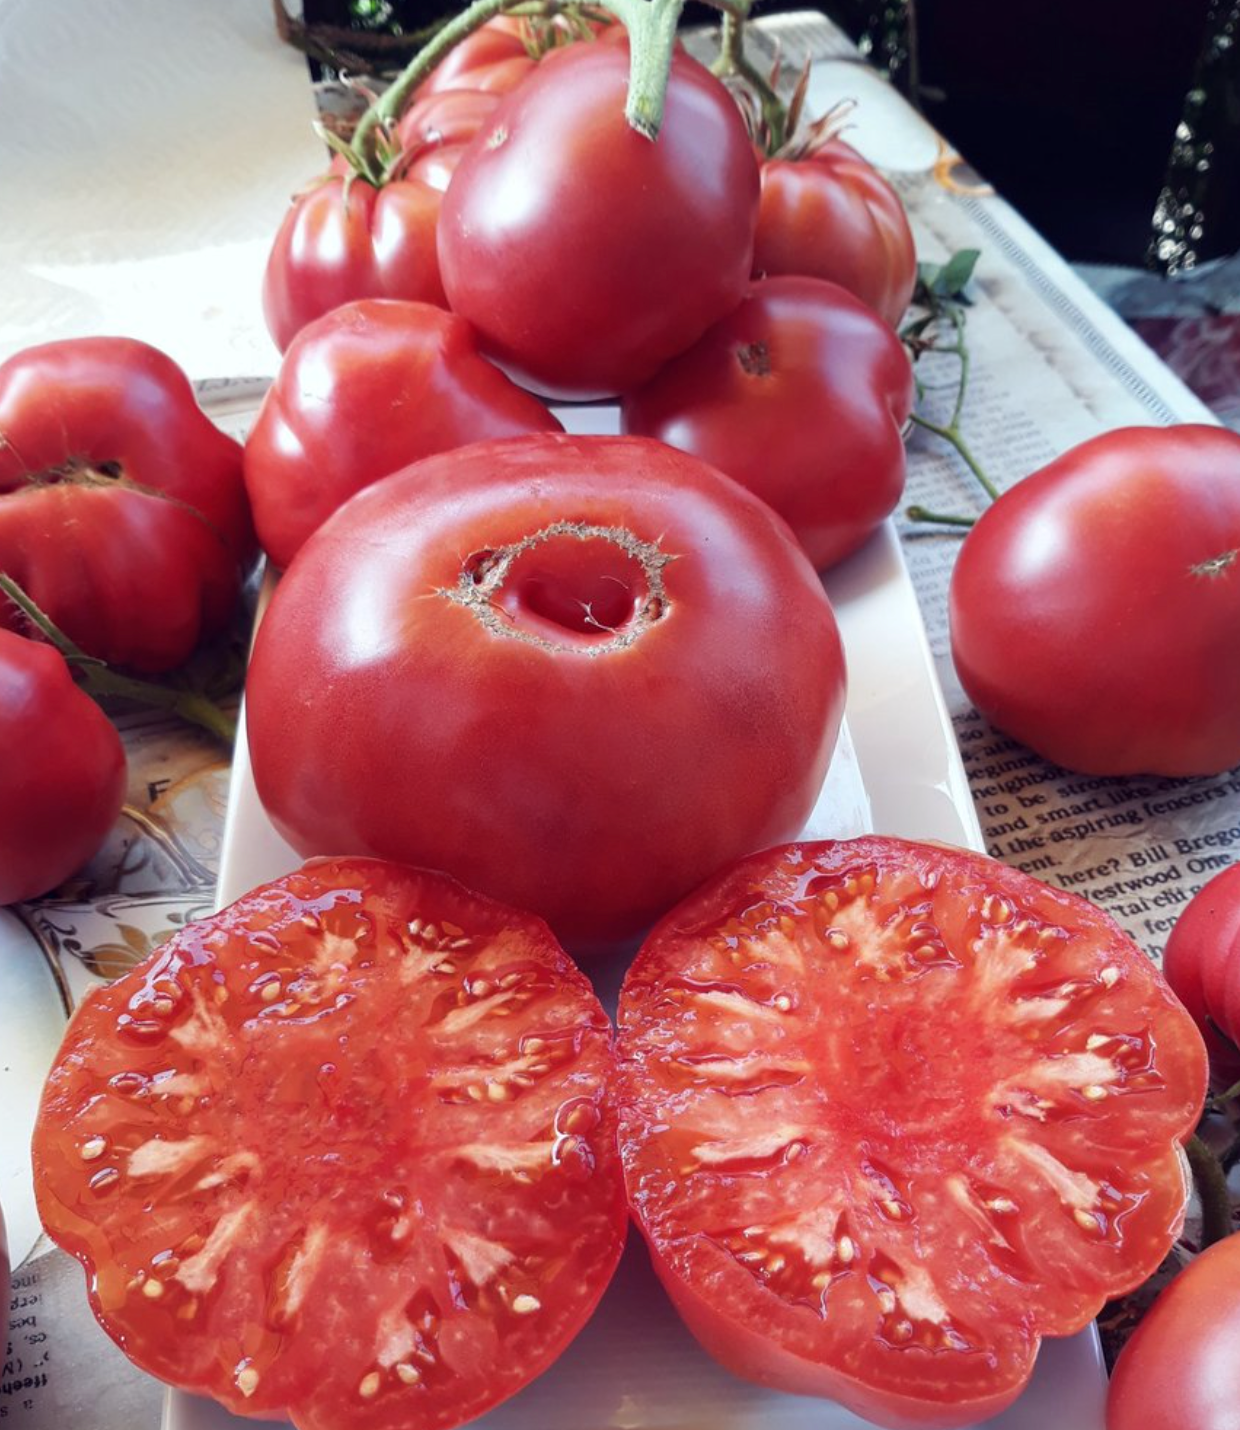 Tomate Crnkovic yugoslavian